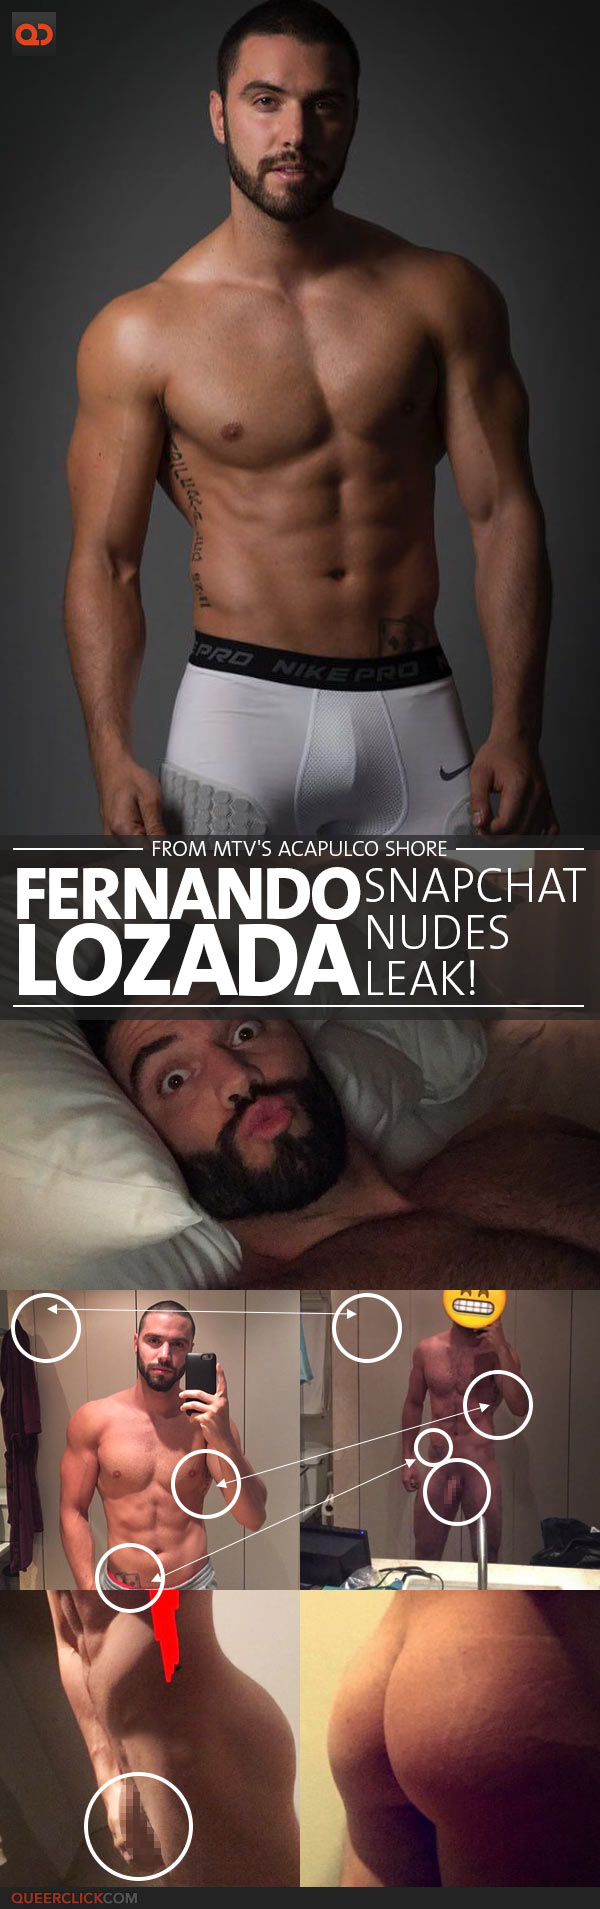 Fernando Lozada, From MTV's Acapulco Shore, Snapchat Nudes Leak!